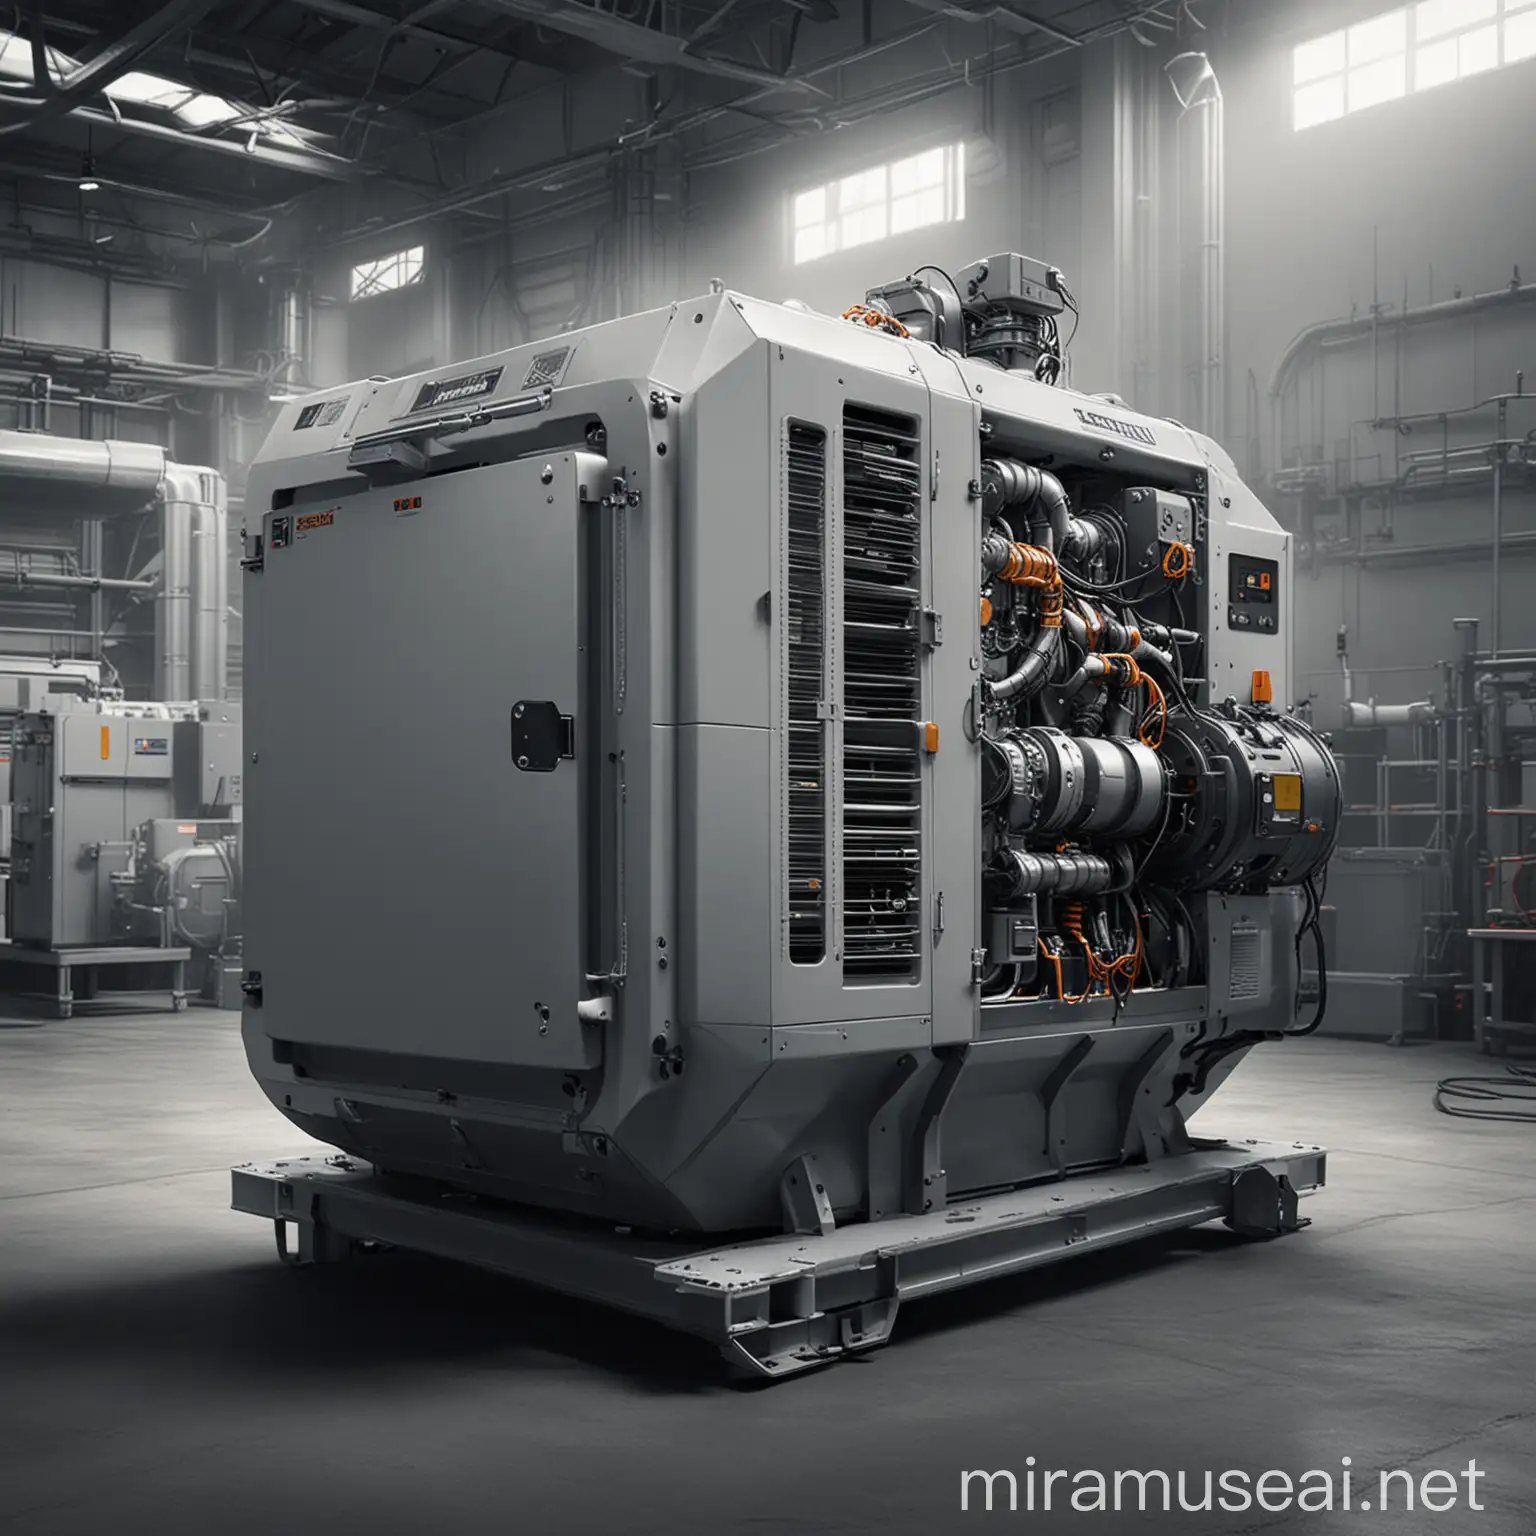 HighTech Power Generator Set in Light Gray Industrial Scene